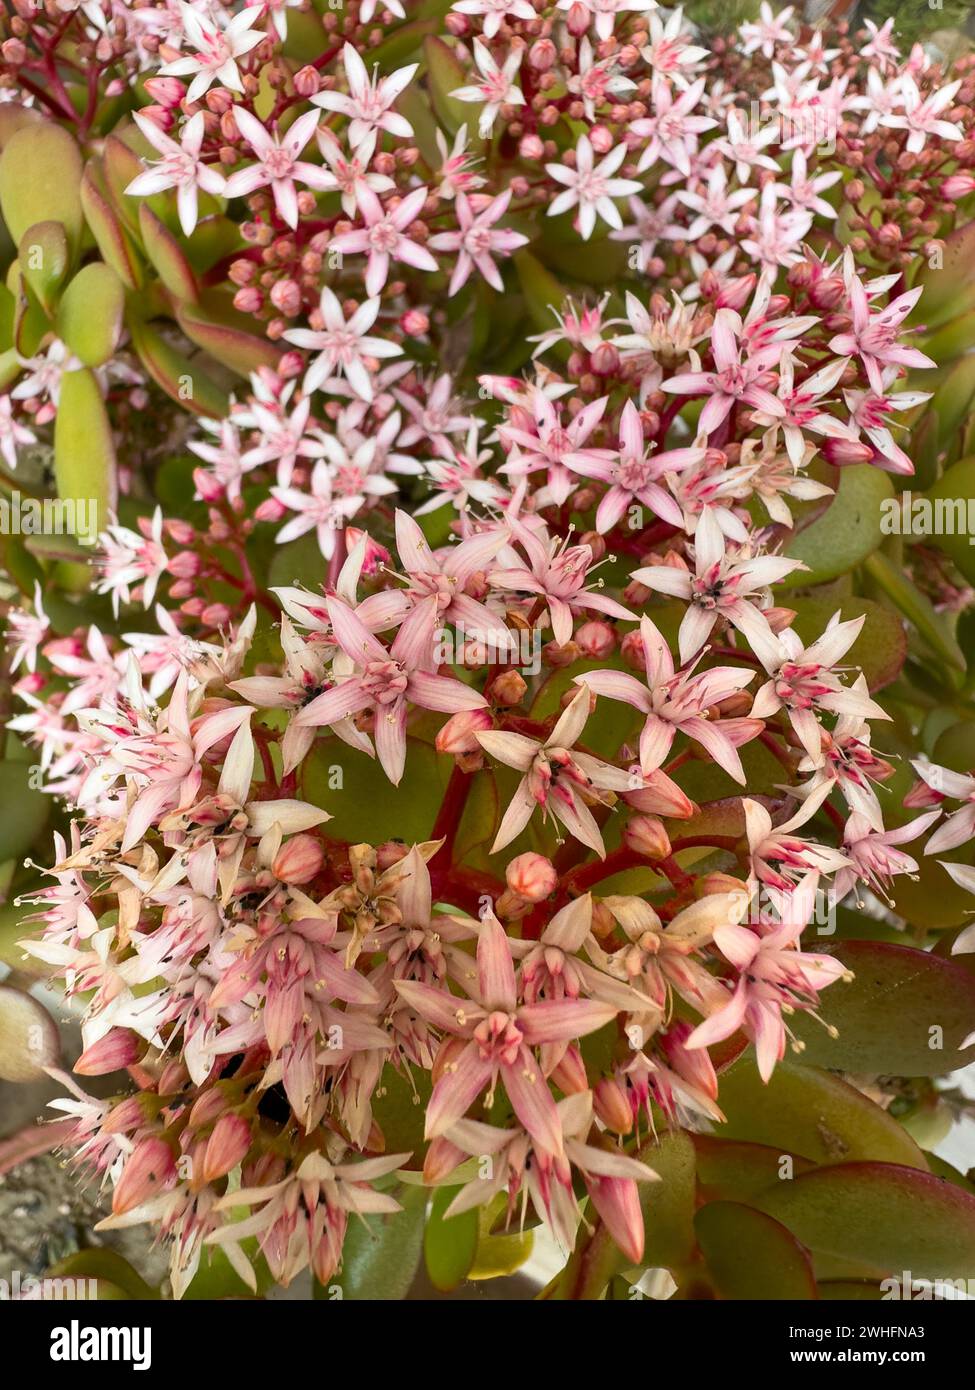 Flowering bush of Crassula ovata jade plant closeup Stock Photo